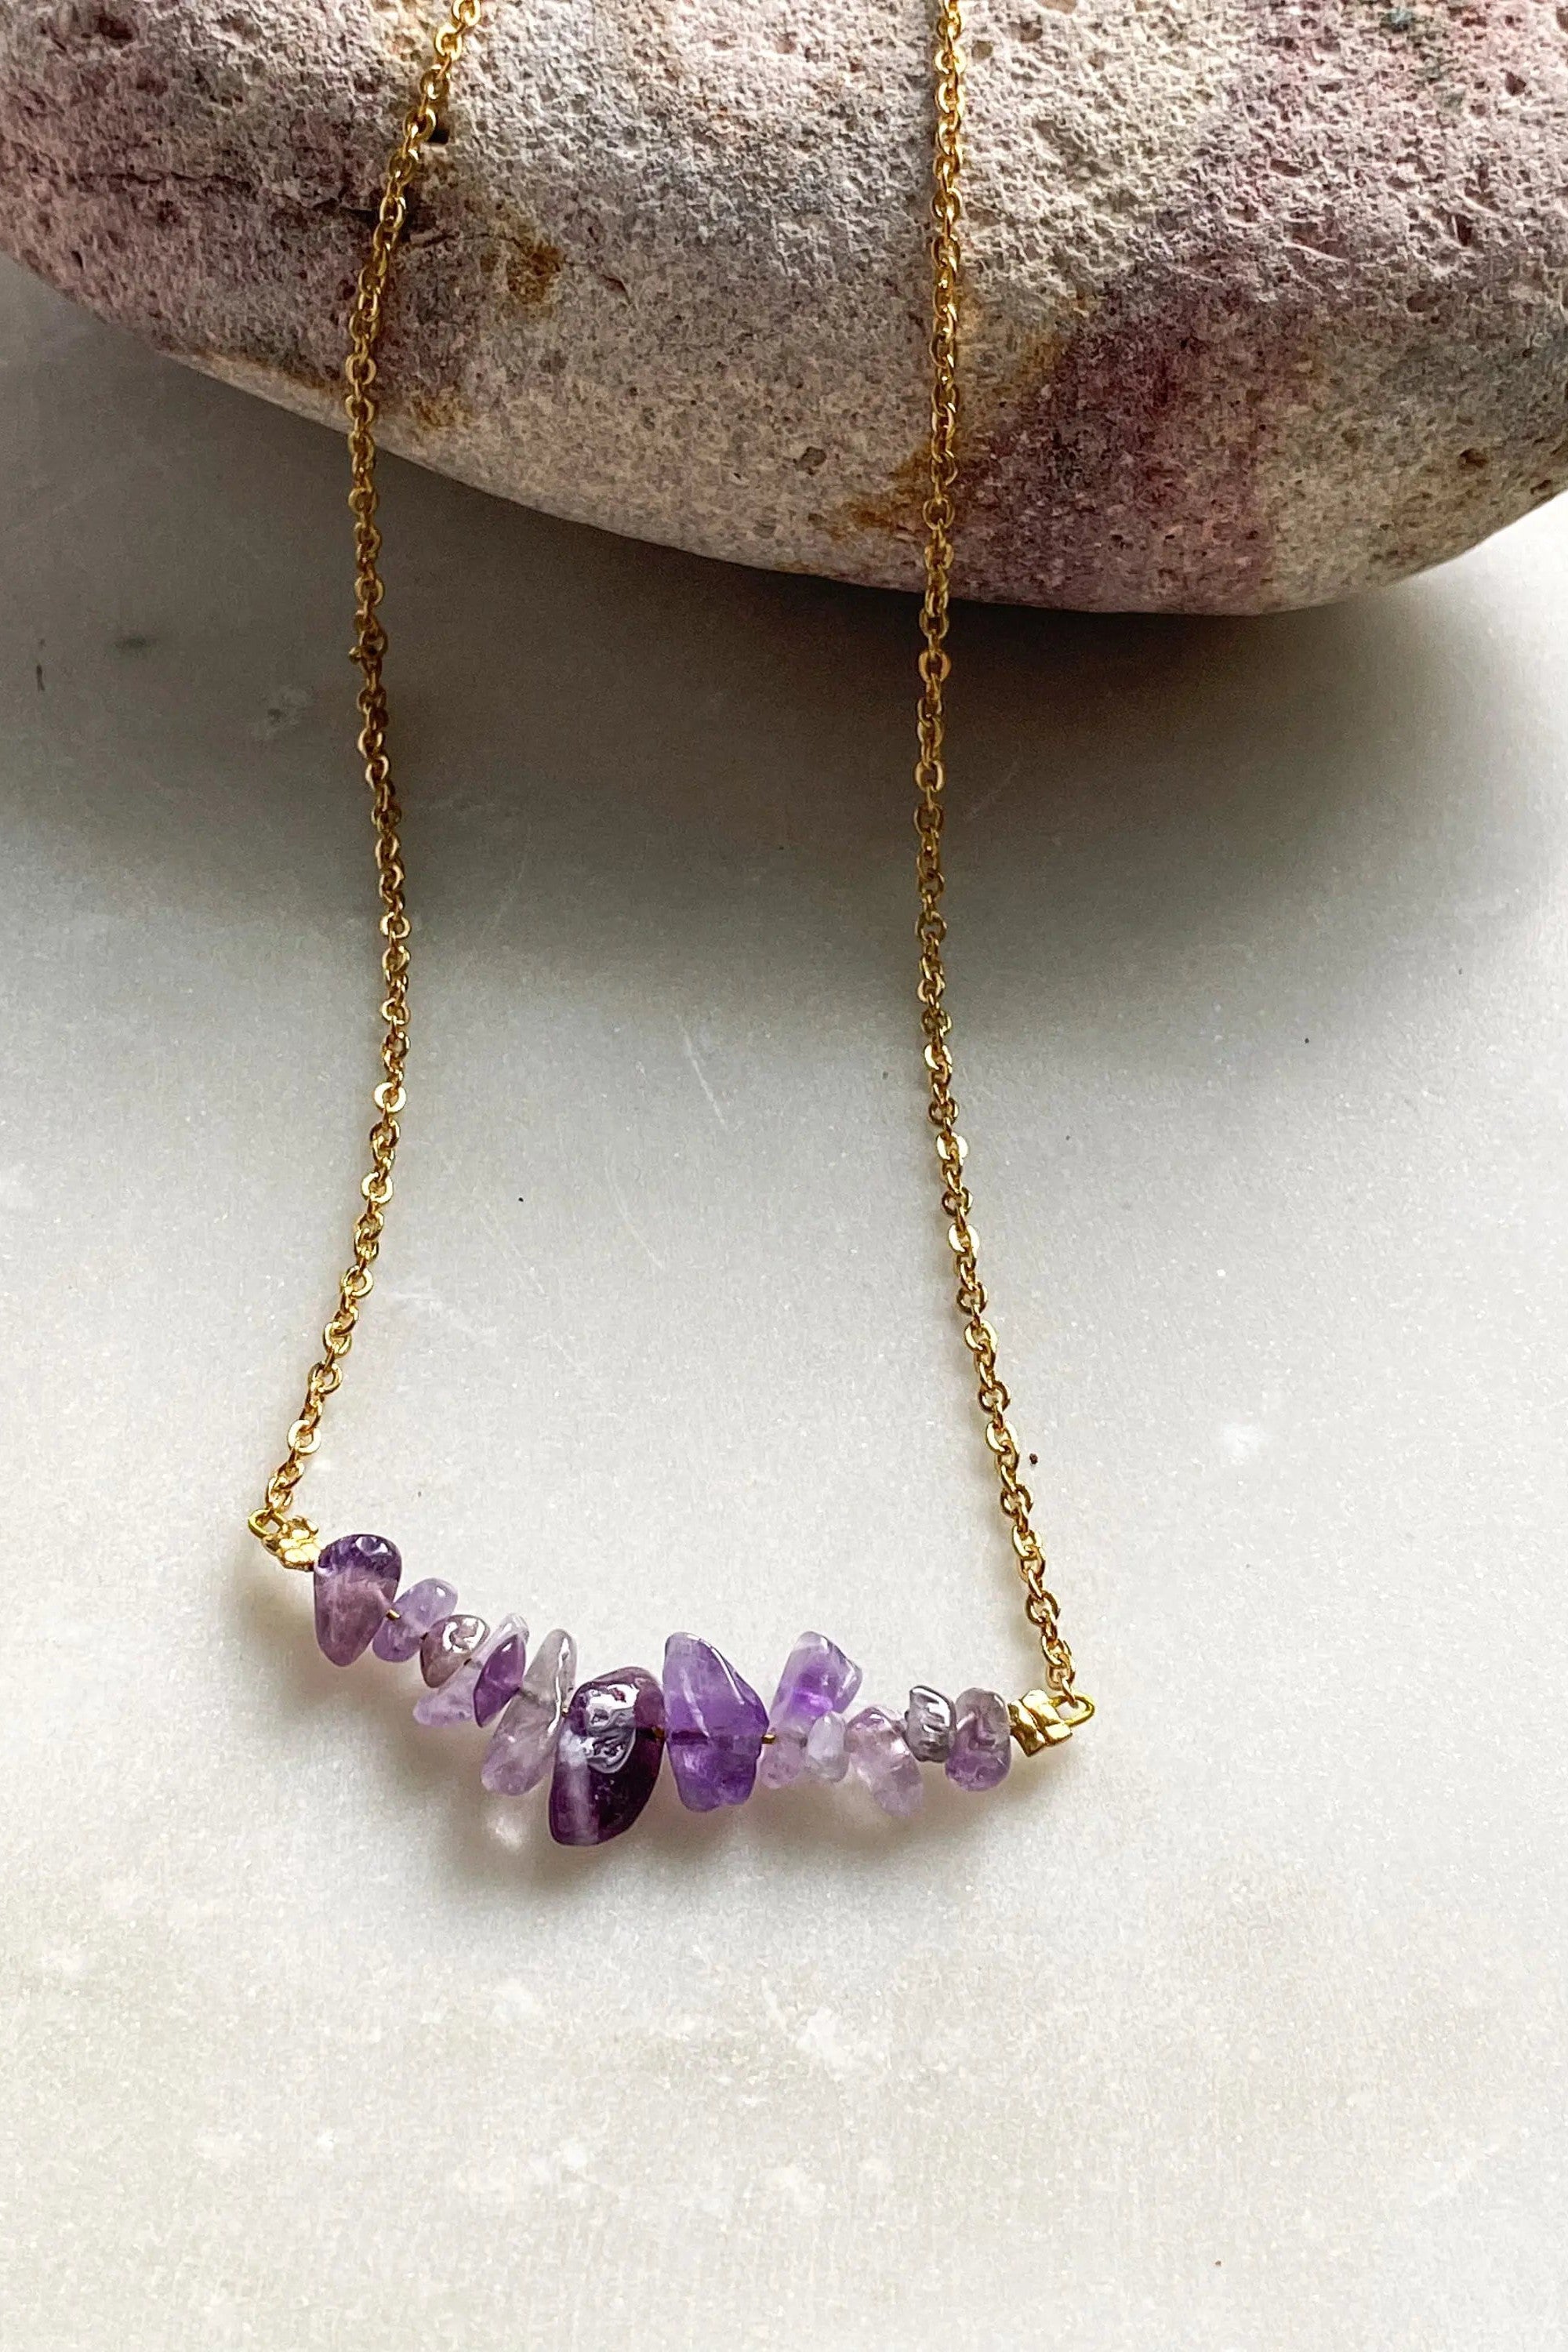 AFRODITA Jade Amethyst Fluorite necklace, Bar elegant necklace, womens jewelry, raw stone necklace, Birthstone gift, Collier Pierres